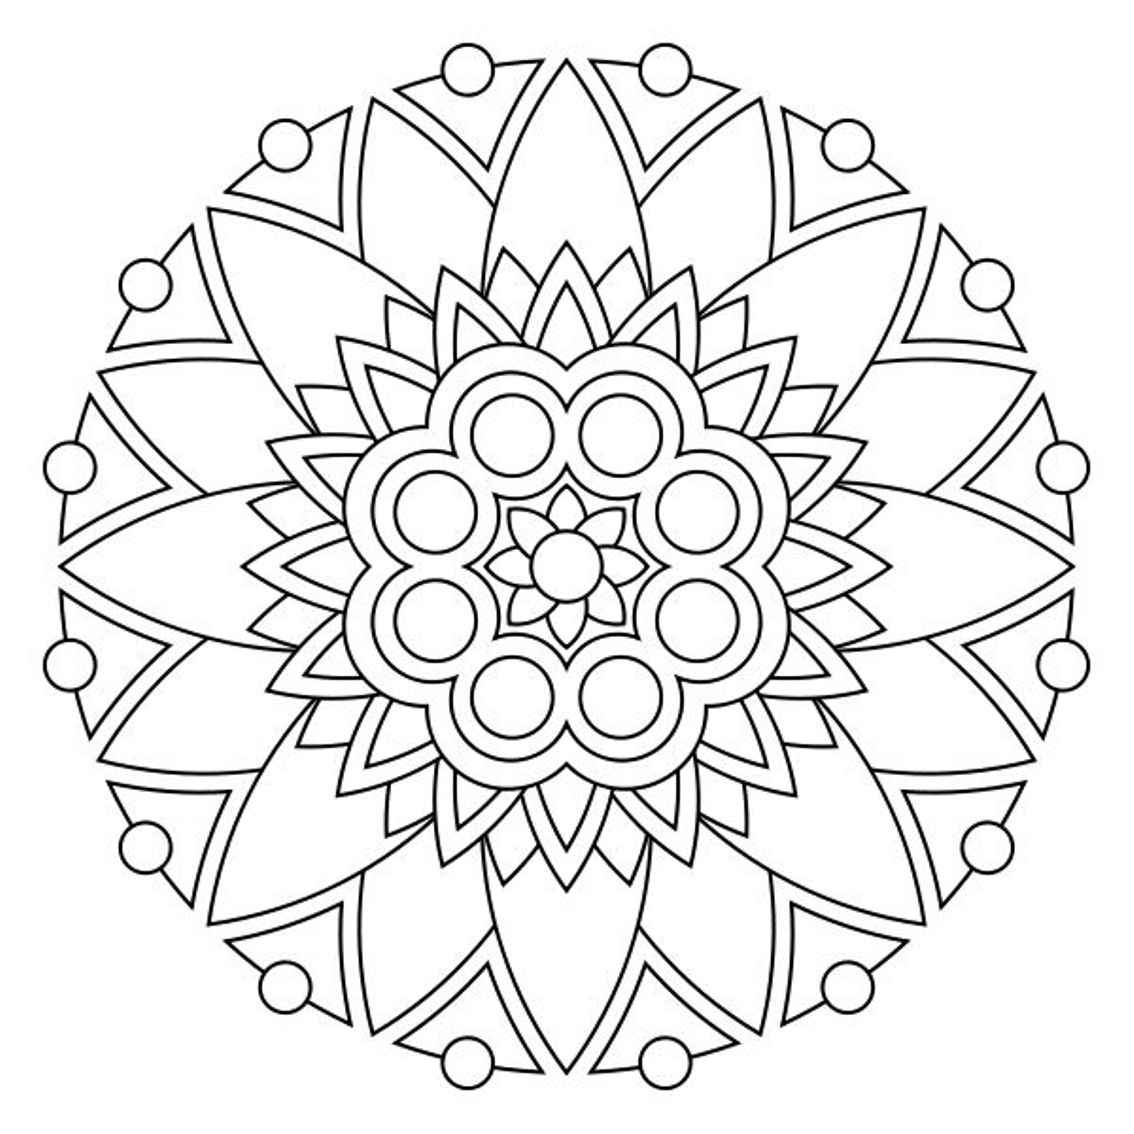 Coloring page: Flowers Mandalas (Mandalas) #117064 - Free Printable Coloring Pages